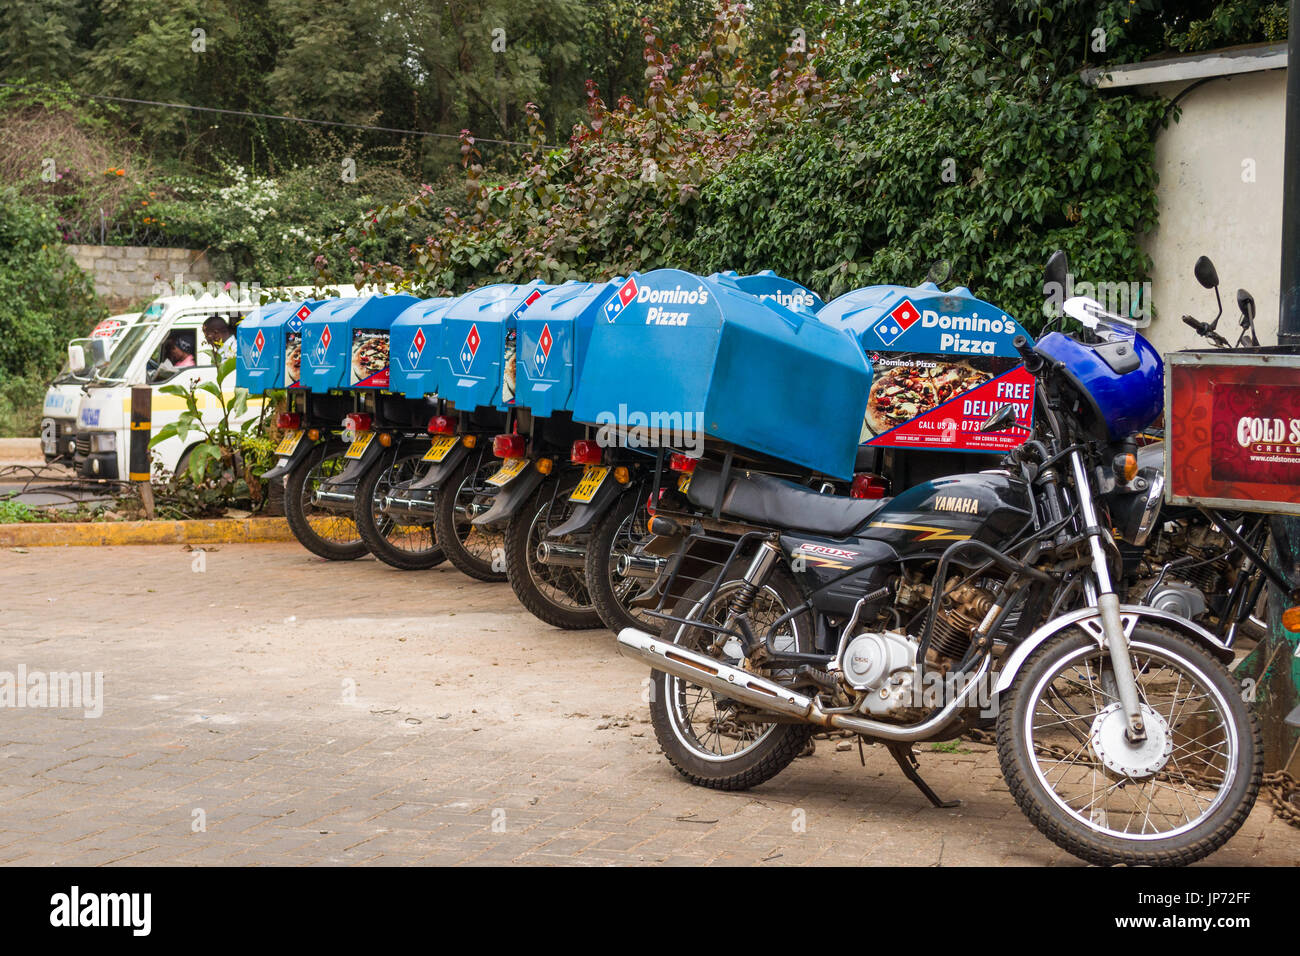 Une rangée de Dominos Pizza Delivery motos garées, Nairobi, Kenya Banque D'Images